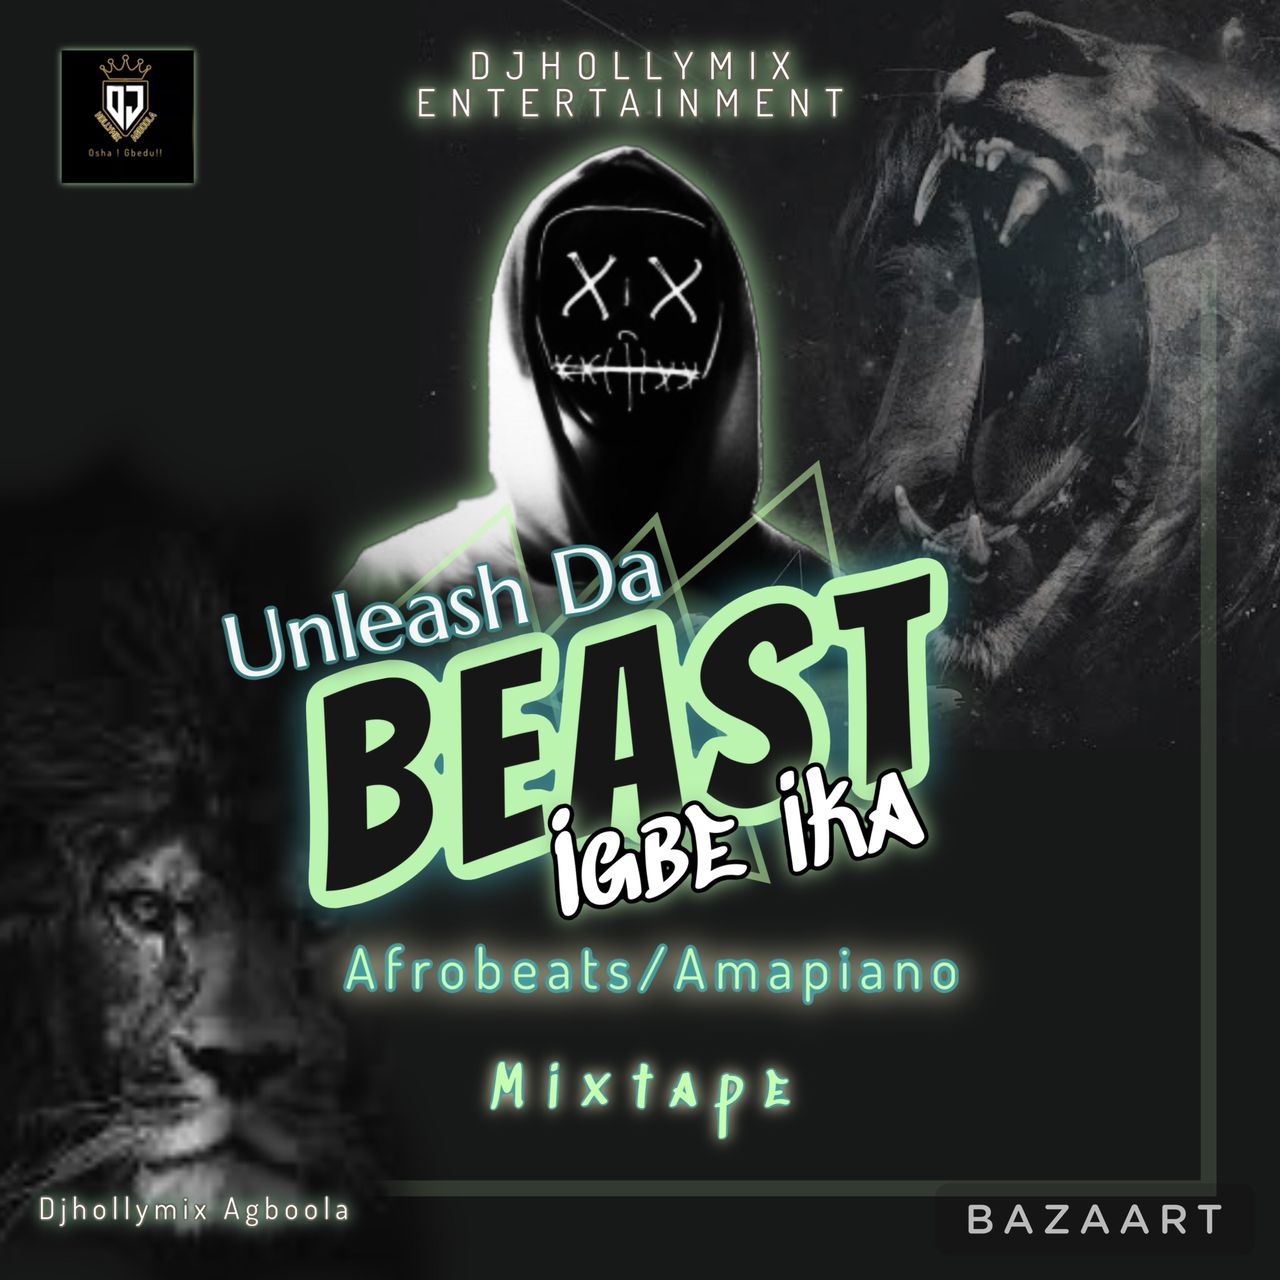 Djhollymix Agboola Unleash Da Beast Amapiano Mixtape